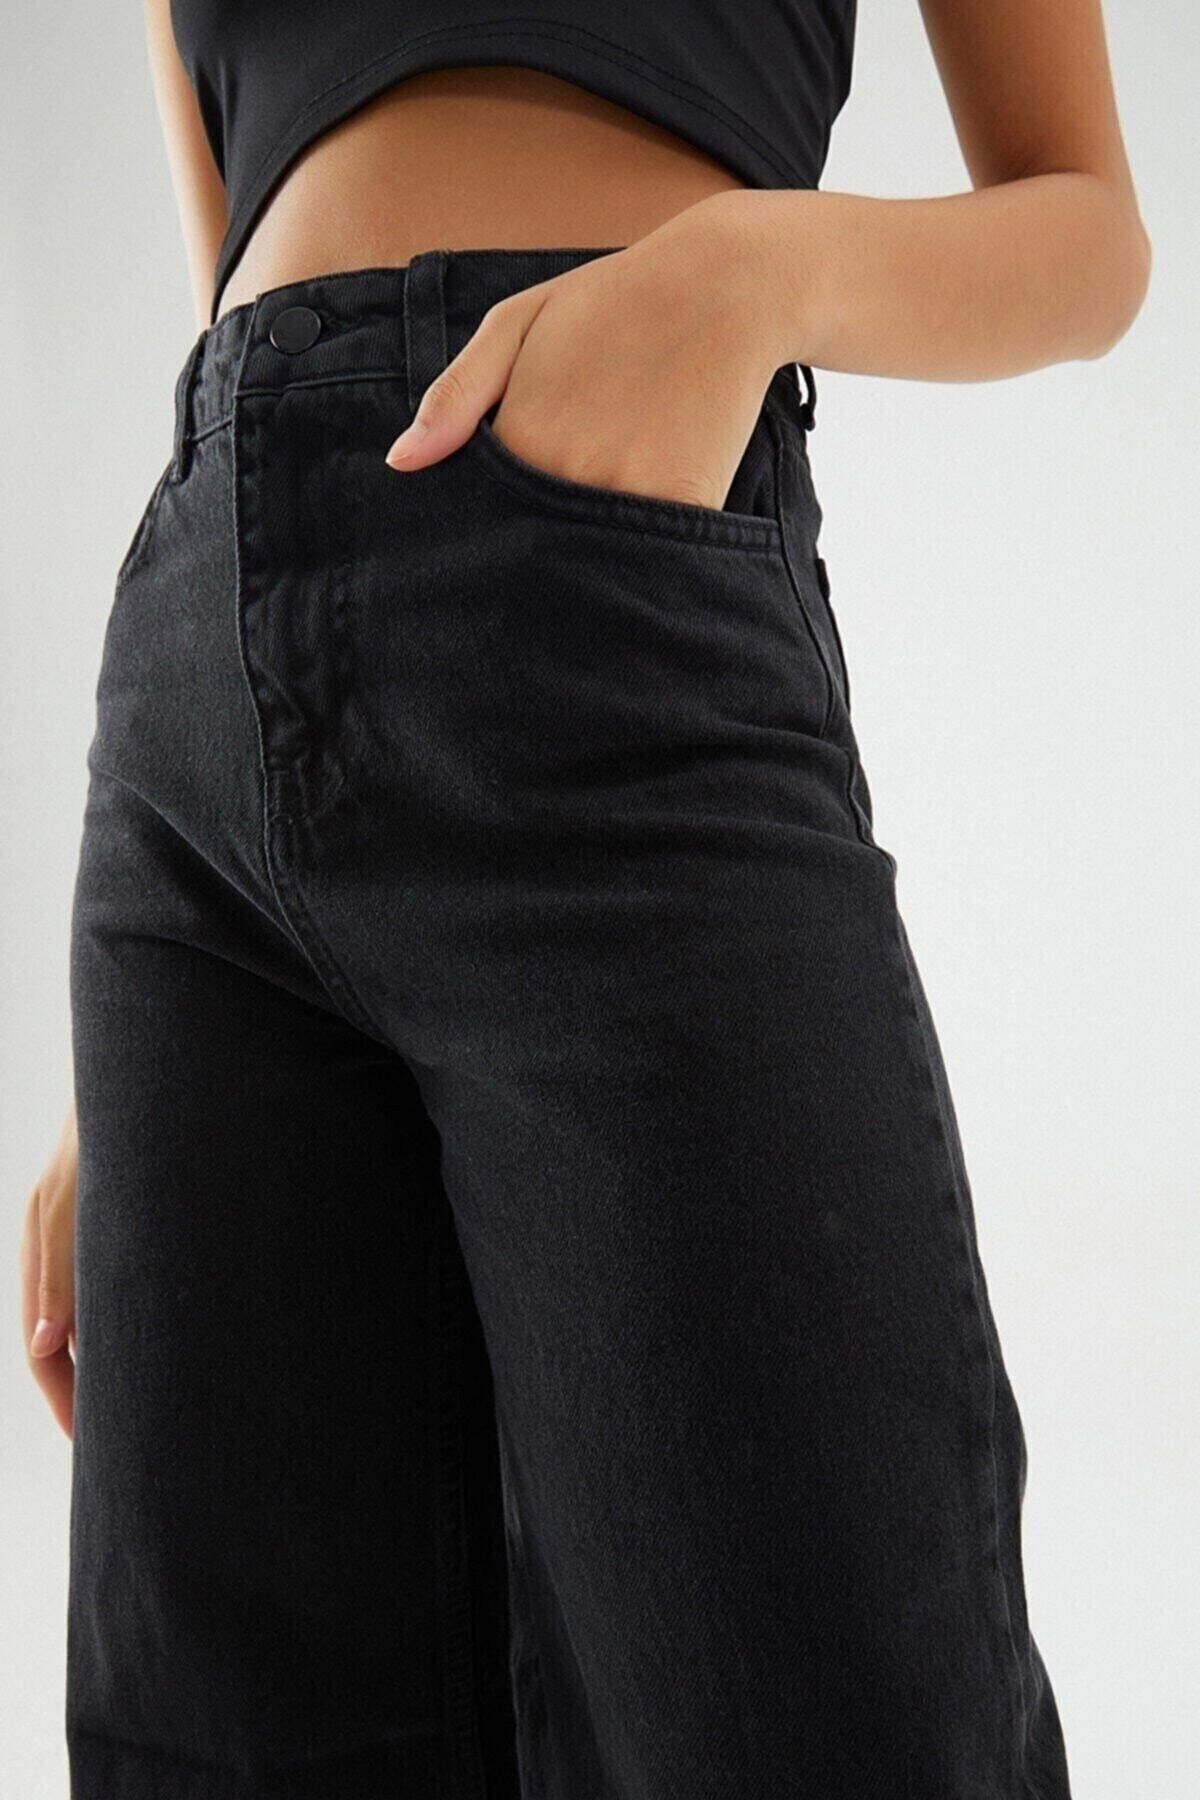 Livik Tıssat Siyah Solmayan Süper Yüksek Bel Bol Paça Denim Kot Pantolon